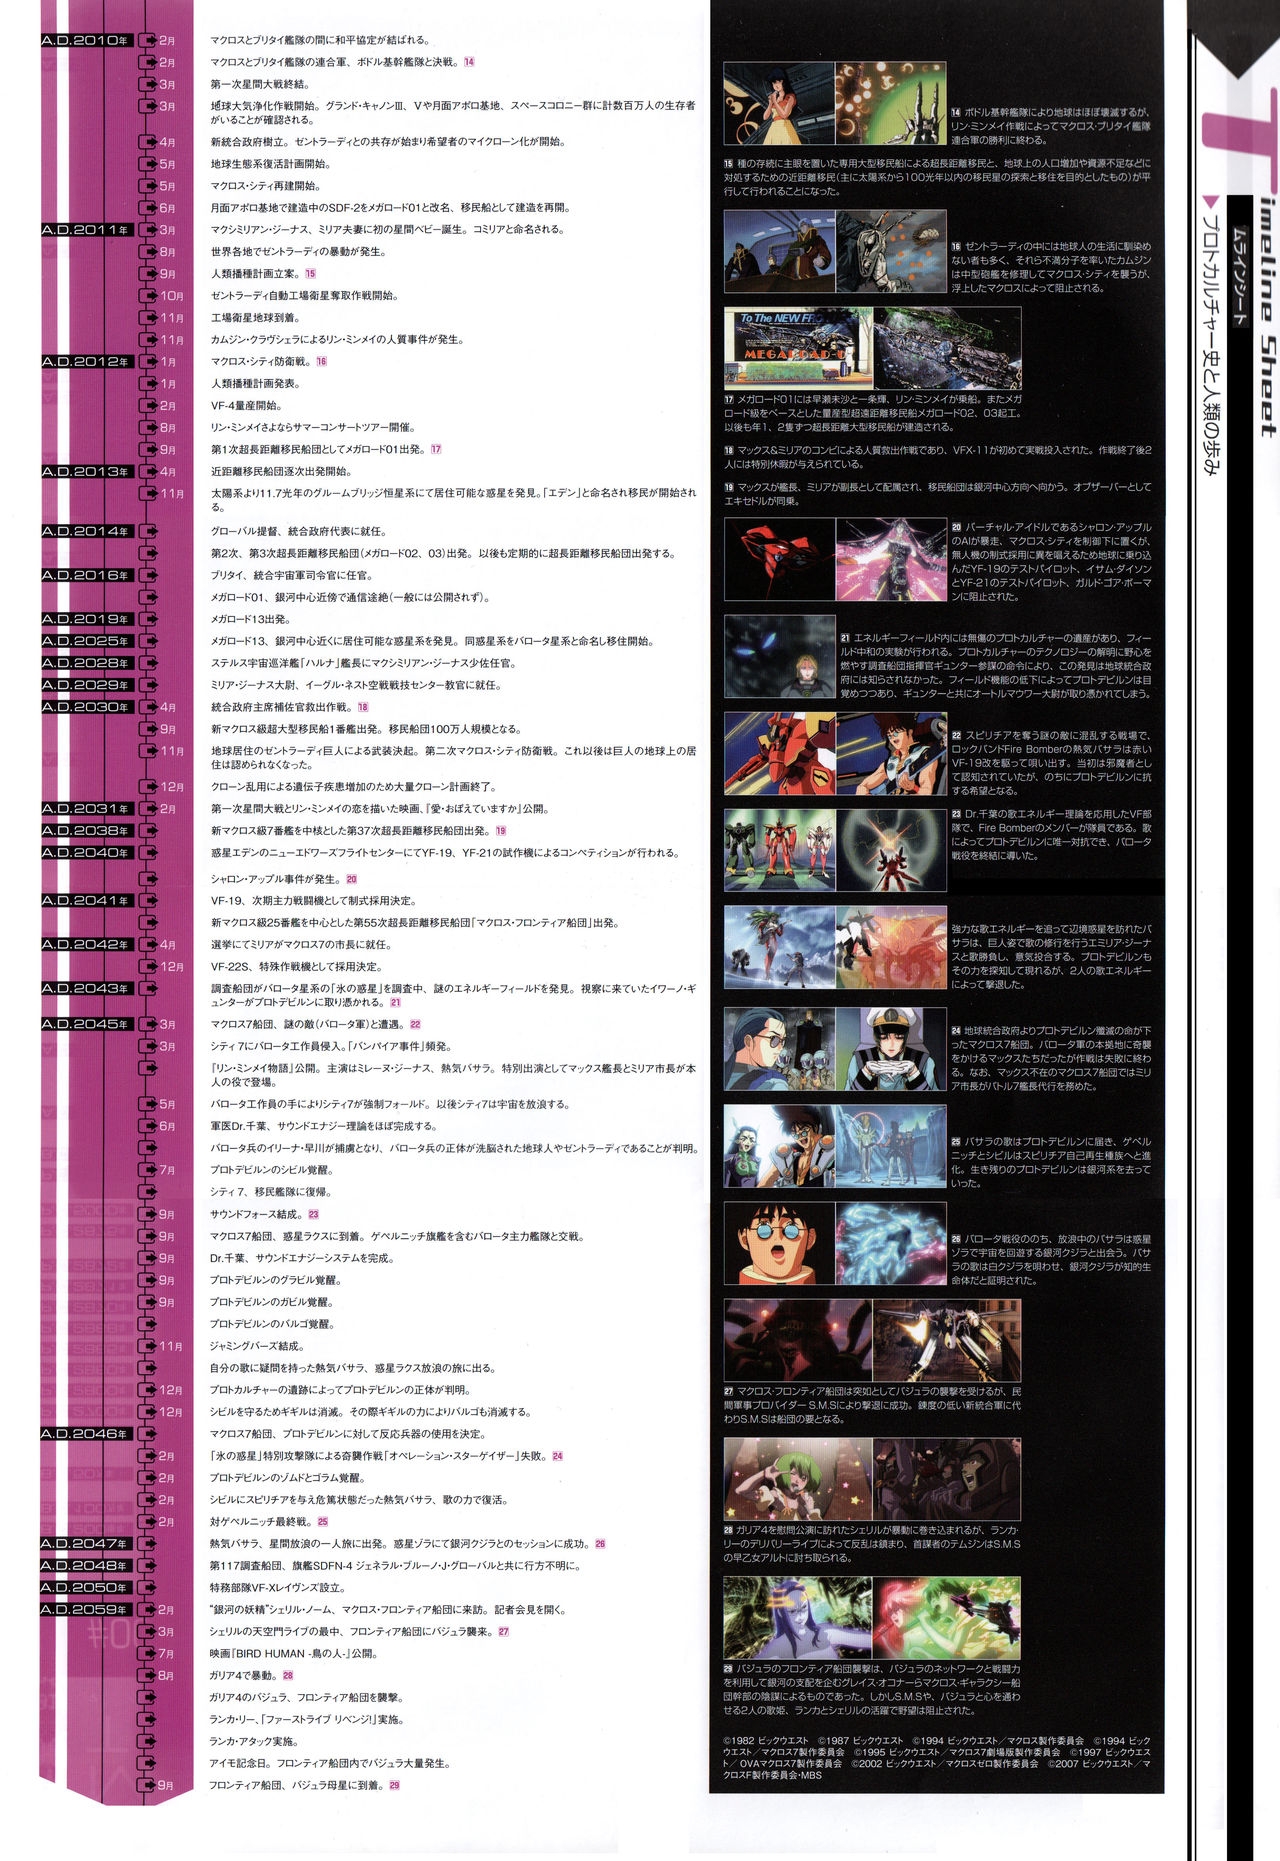 Macross Chronicle - 30th Anniversary (07/13) - Timeline Sheet 3